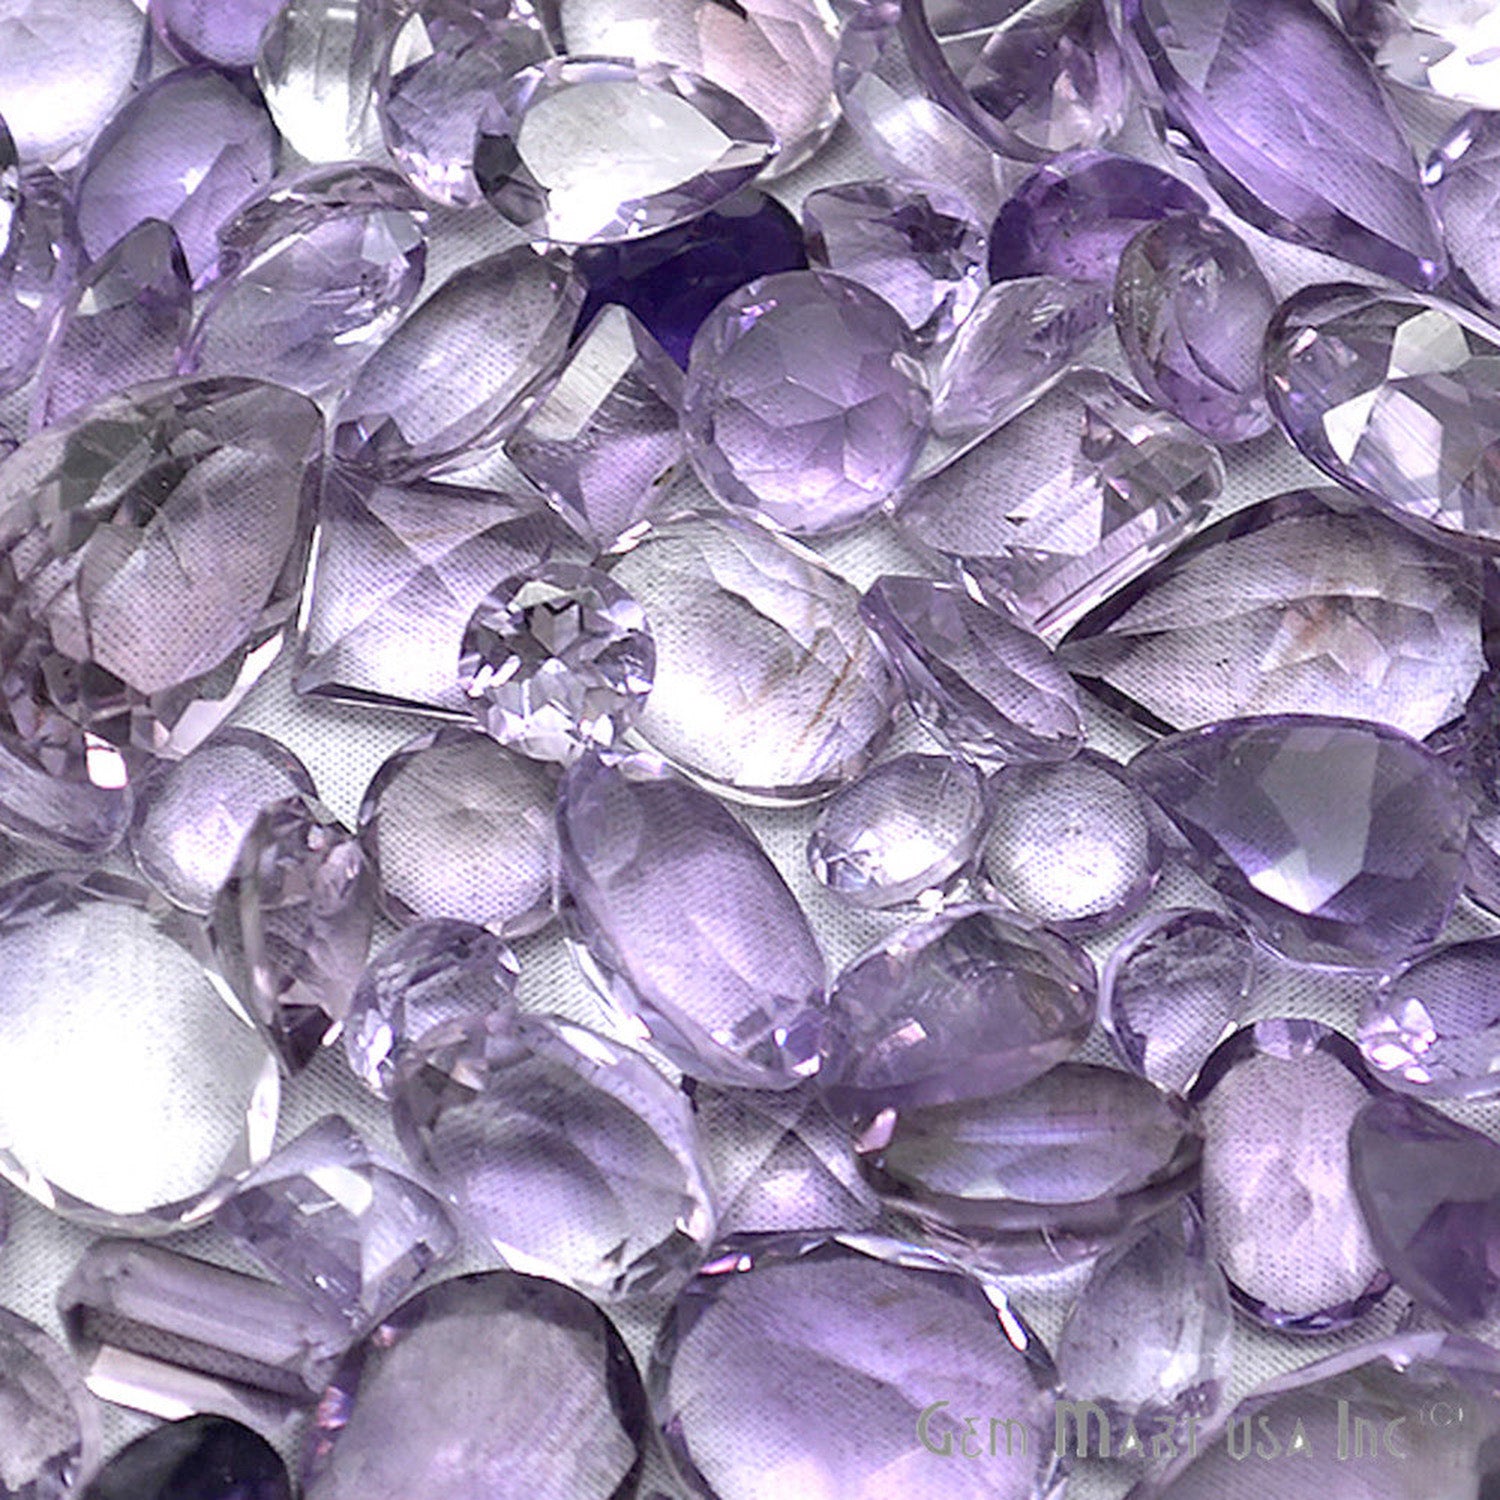 50 Carat Amethyst Mix Shape Wholesale Loose Gemstones - GemMartUSA